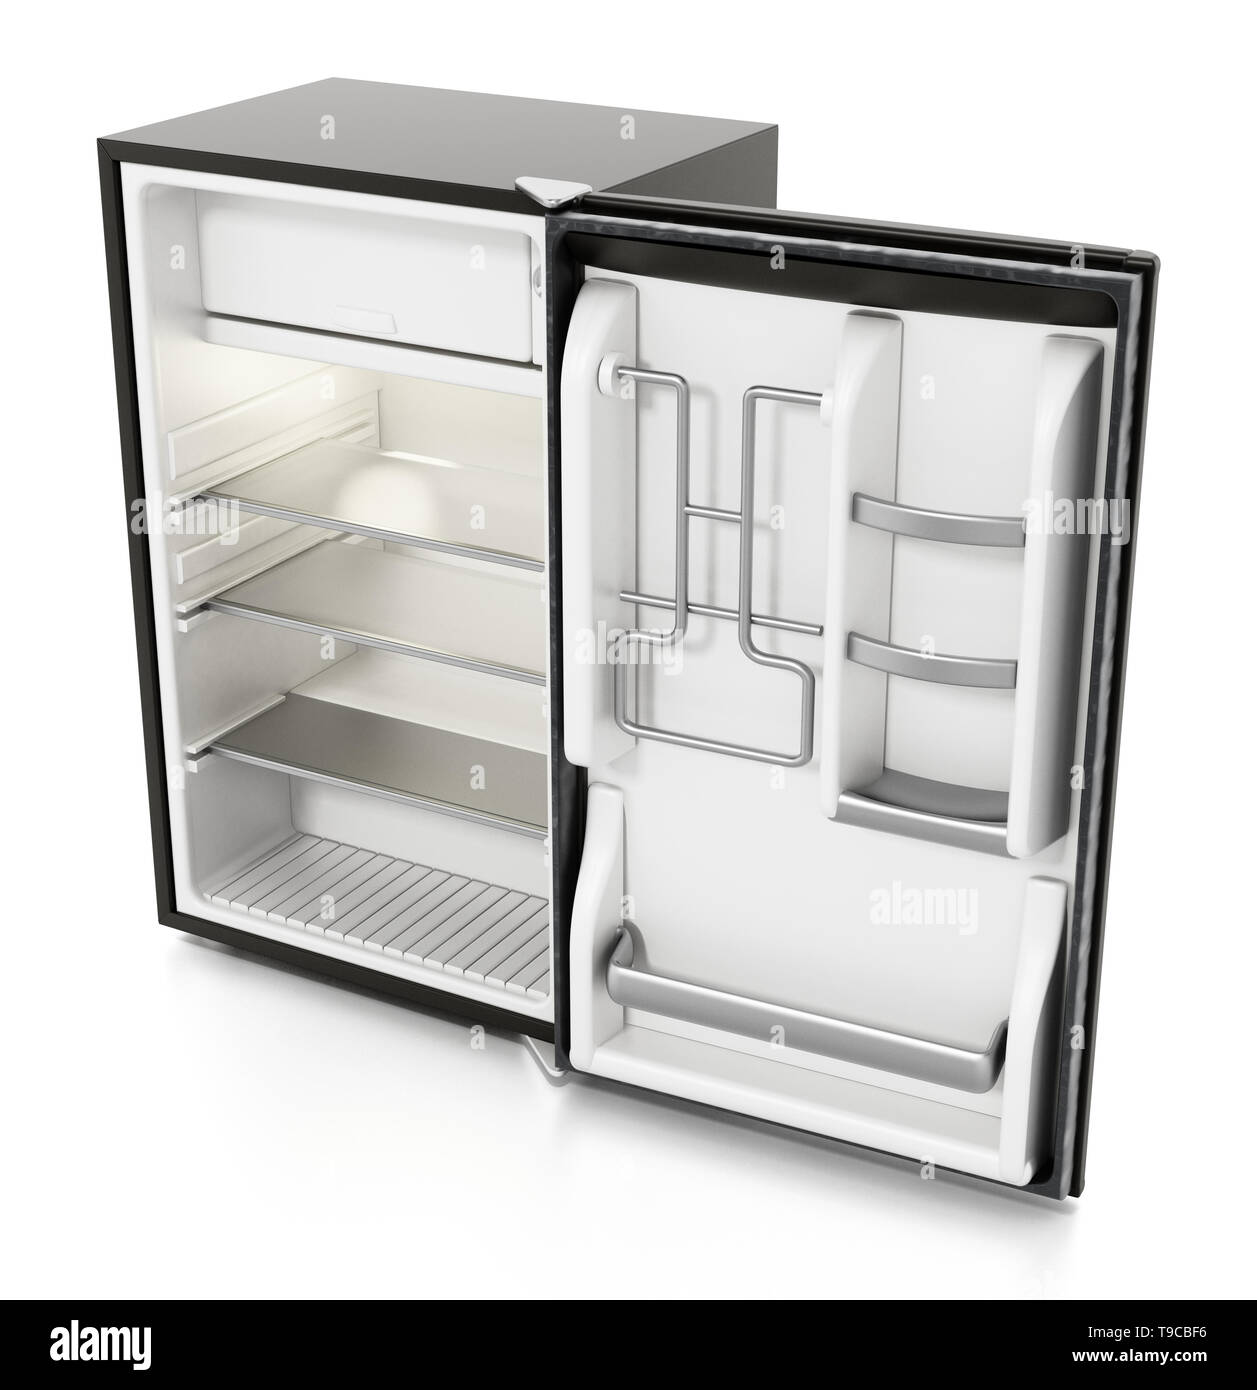 Small size hotel refrigerator isolated on white background. 3D illustration. Stock Photo